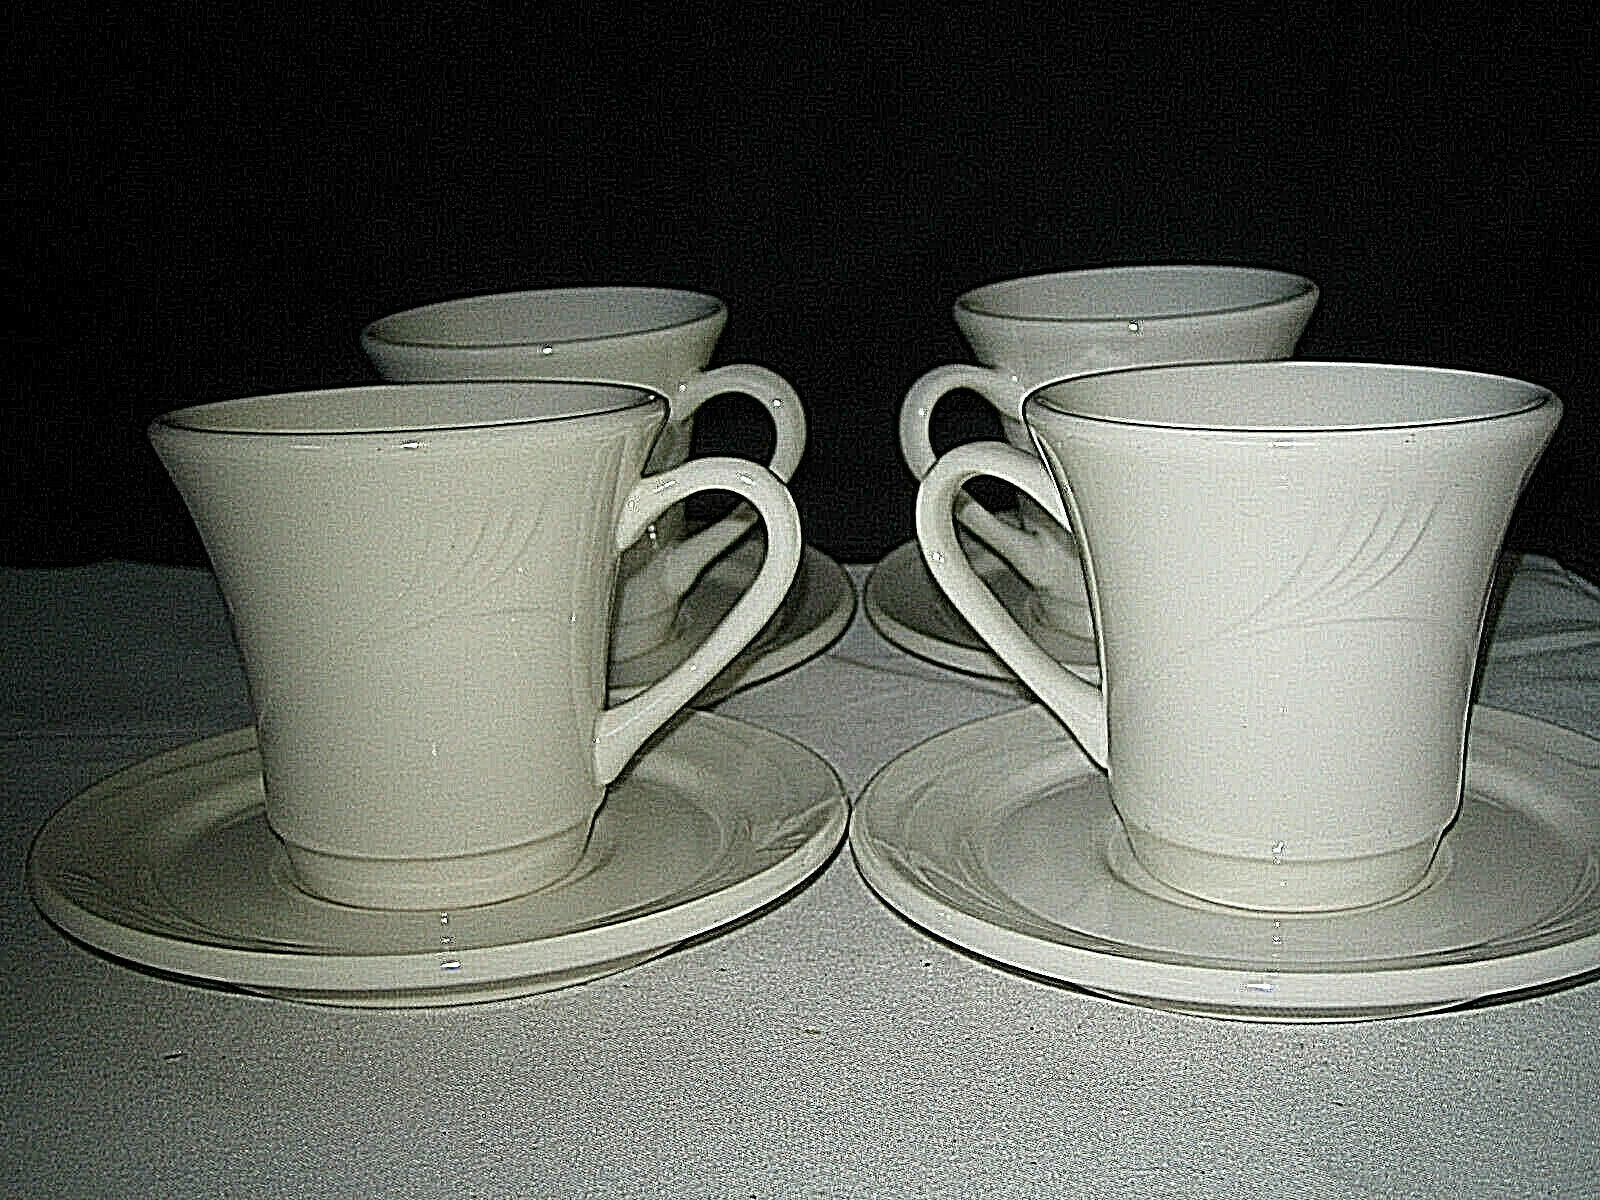 Primary image for Oneida Espree Tailsman Cups & Saucers set Cream White Porcelain F1040000510 more